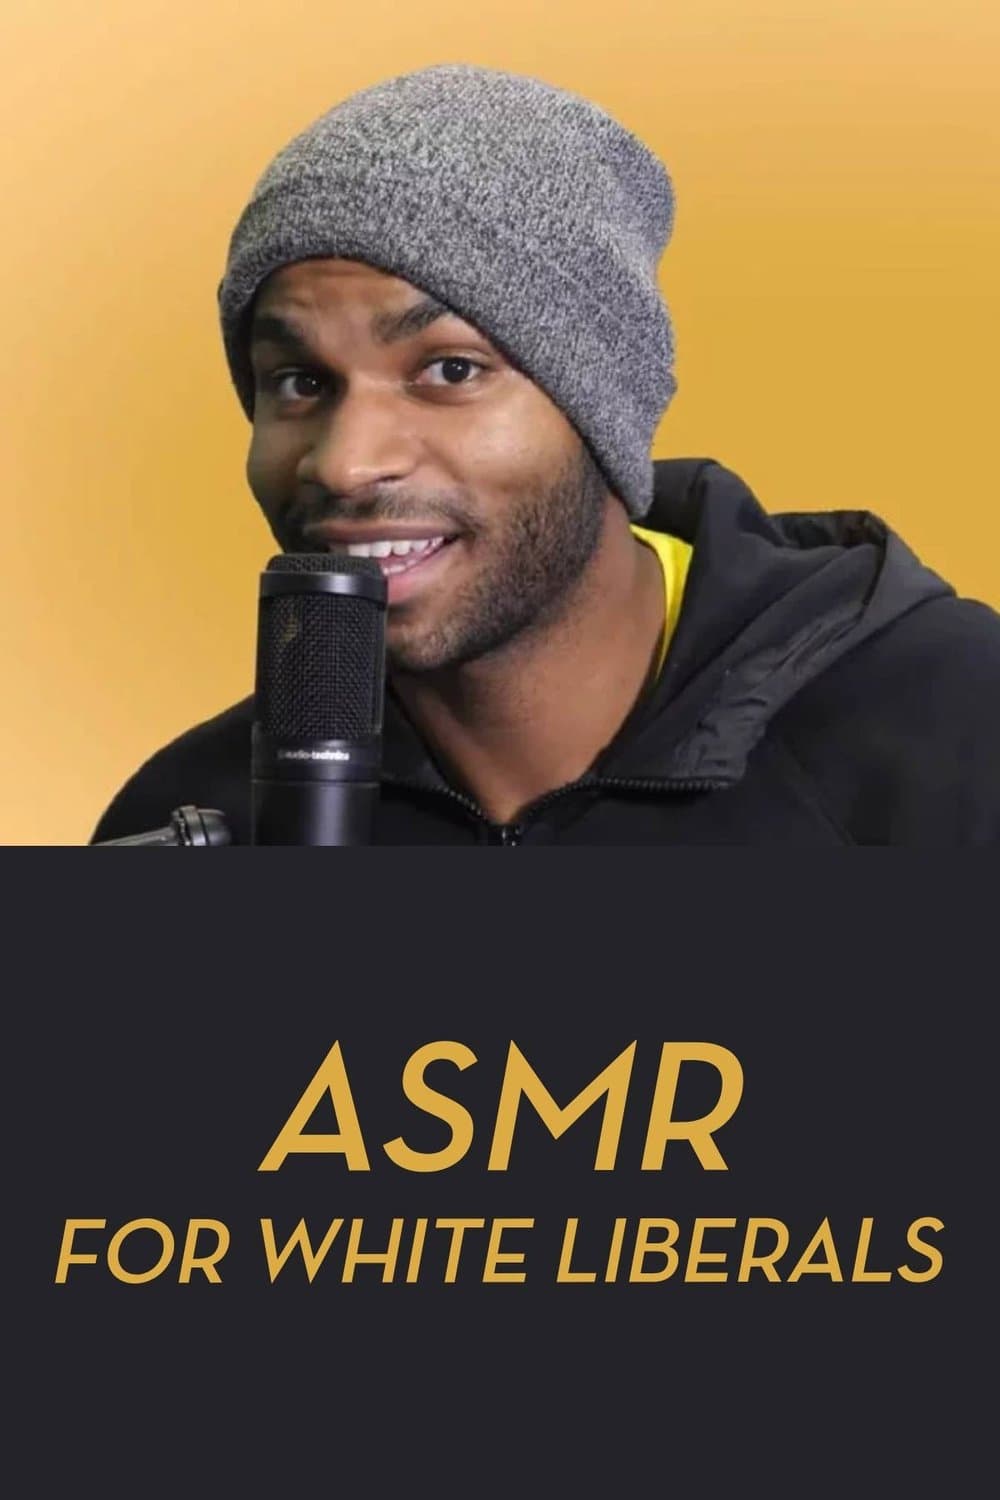 ASMR for White Liberals